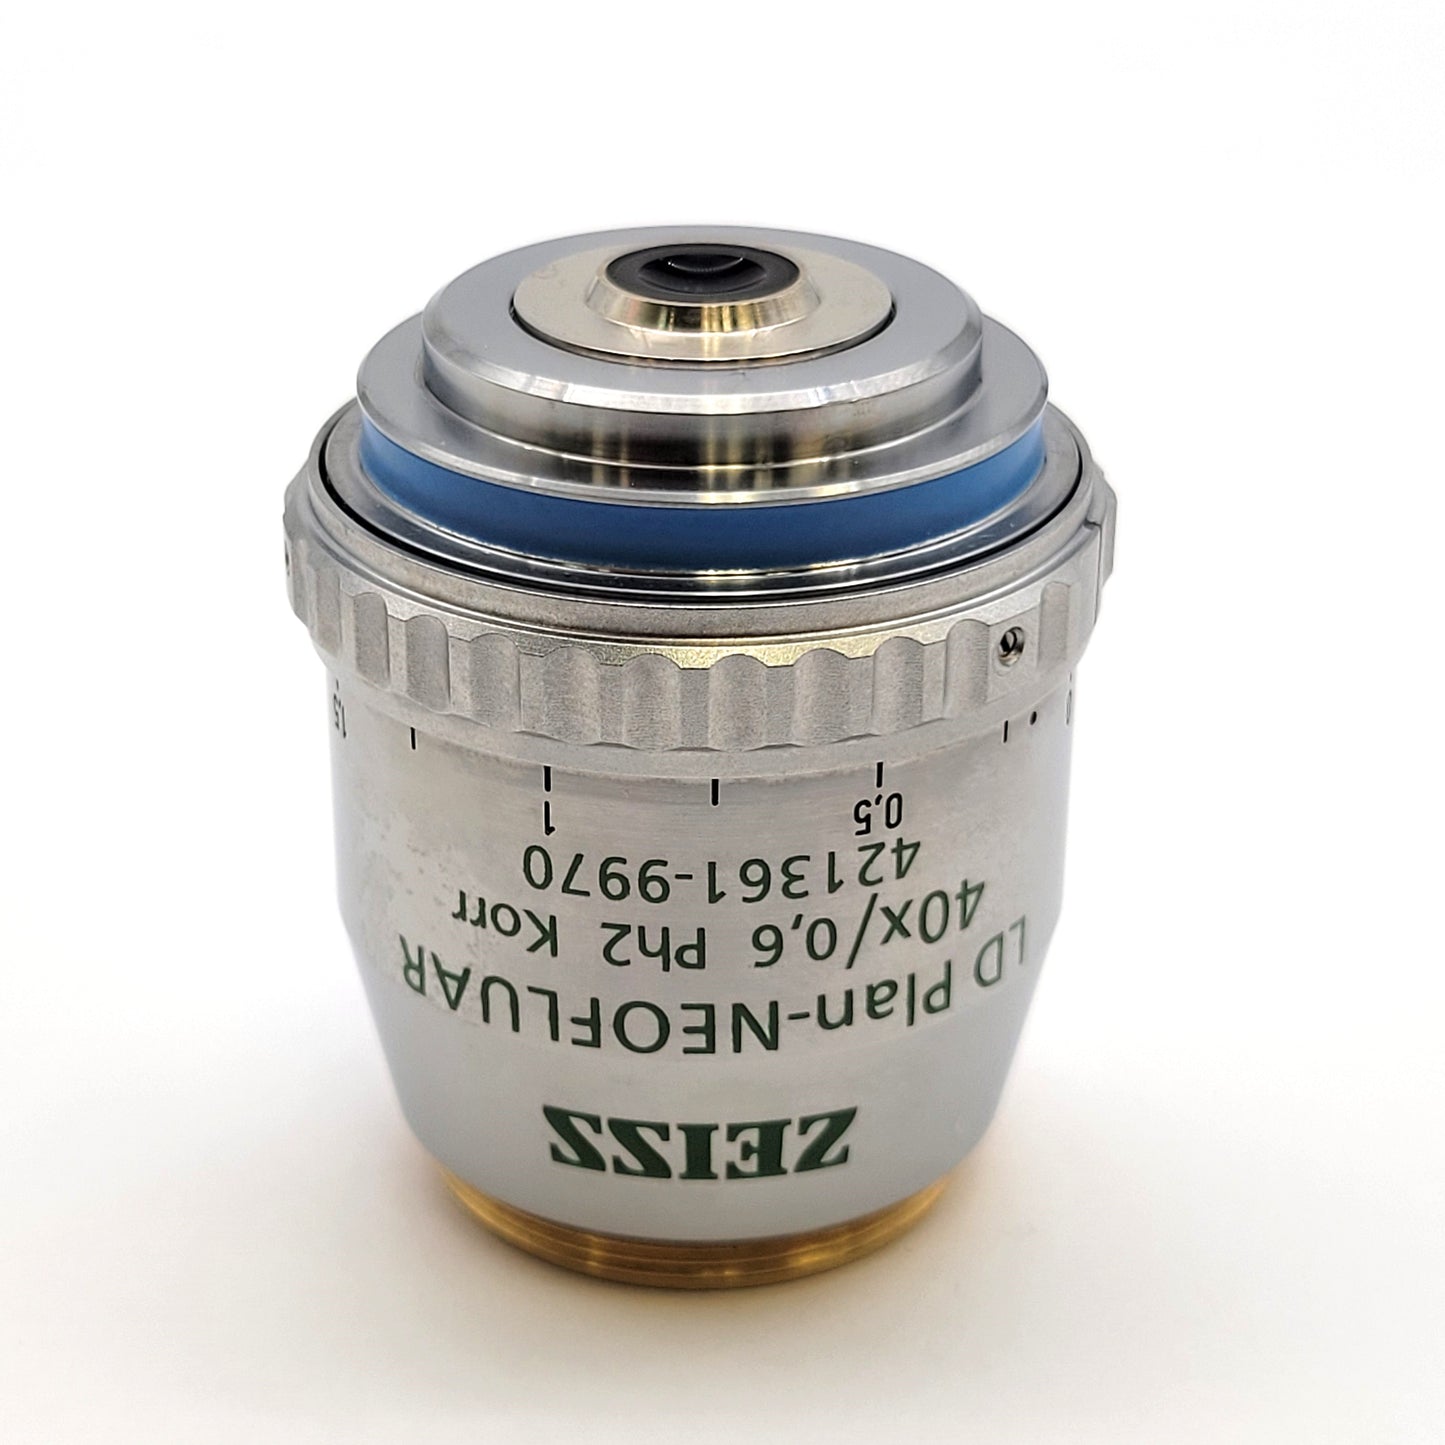 Zeiss Microscope Objective LD Plan-NEOFLUAR 40x Ph2 w Correction M27 421361-9970 - microscopemarketplace